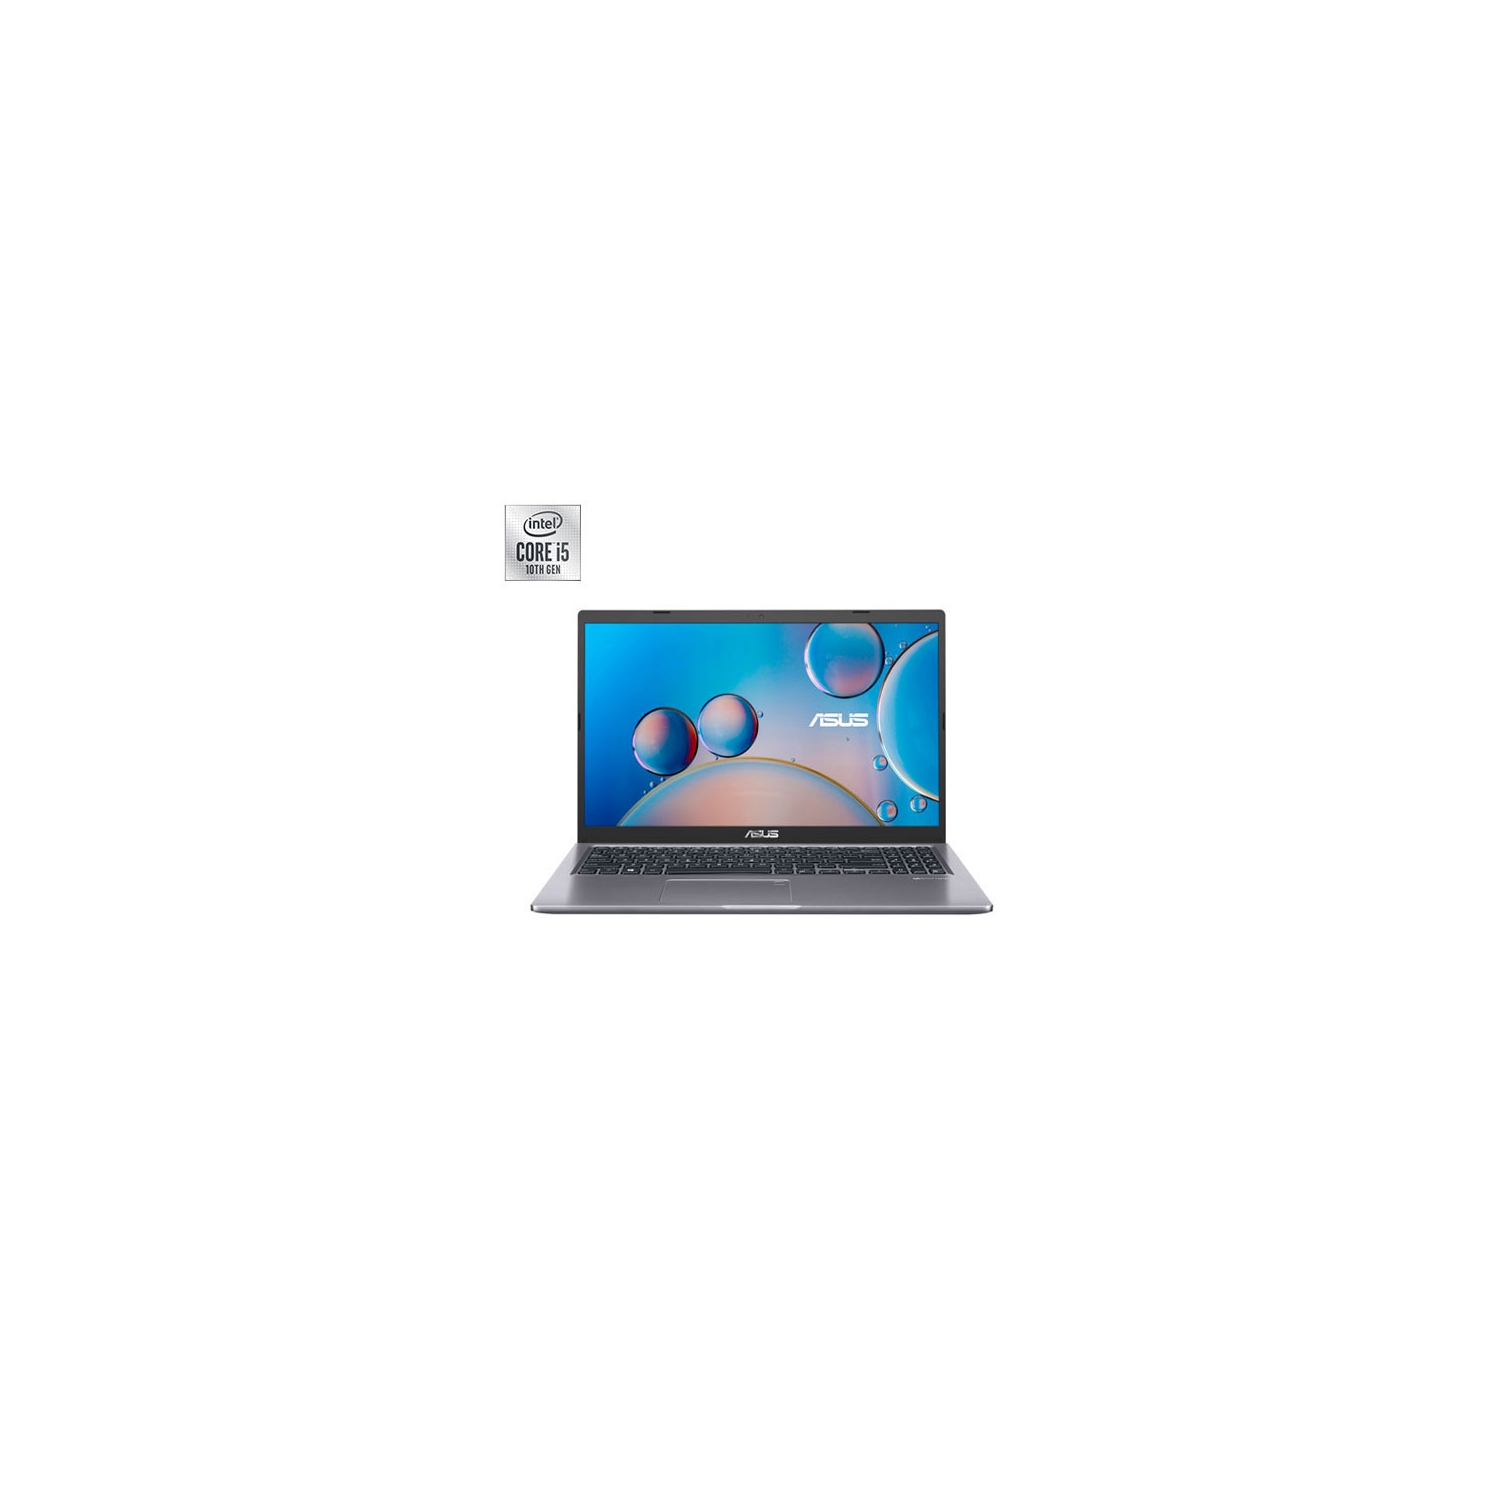 Refurbished (Fair) - ASUS VivoBook X515 15.6" Laptop - Slate Grey (Intel Core i5-1035G1/256GB SSD/8GB RAM/Windows 10)